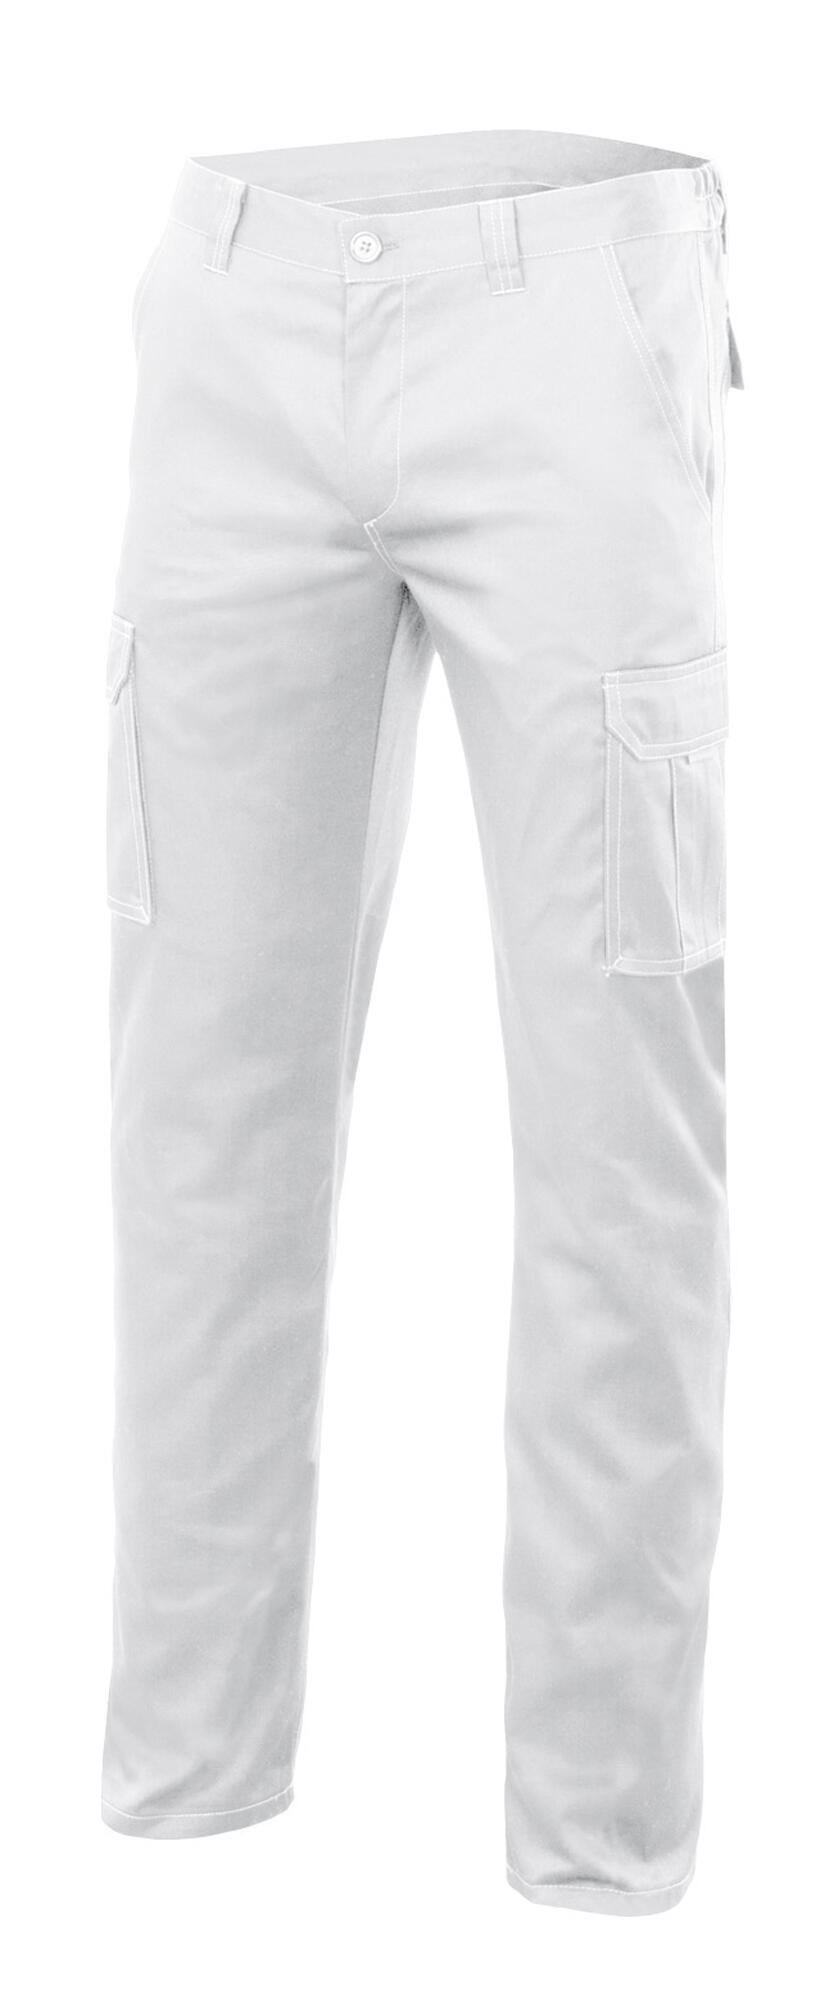 Pantalon de trabajo multibolsillo stretch blanco t60